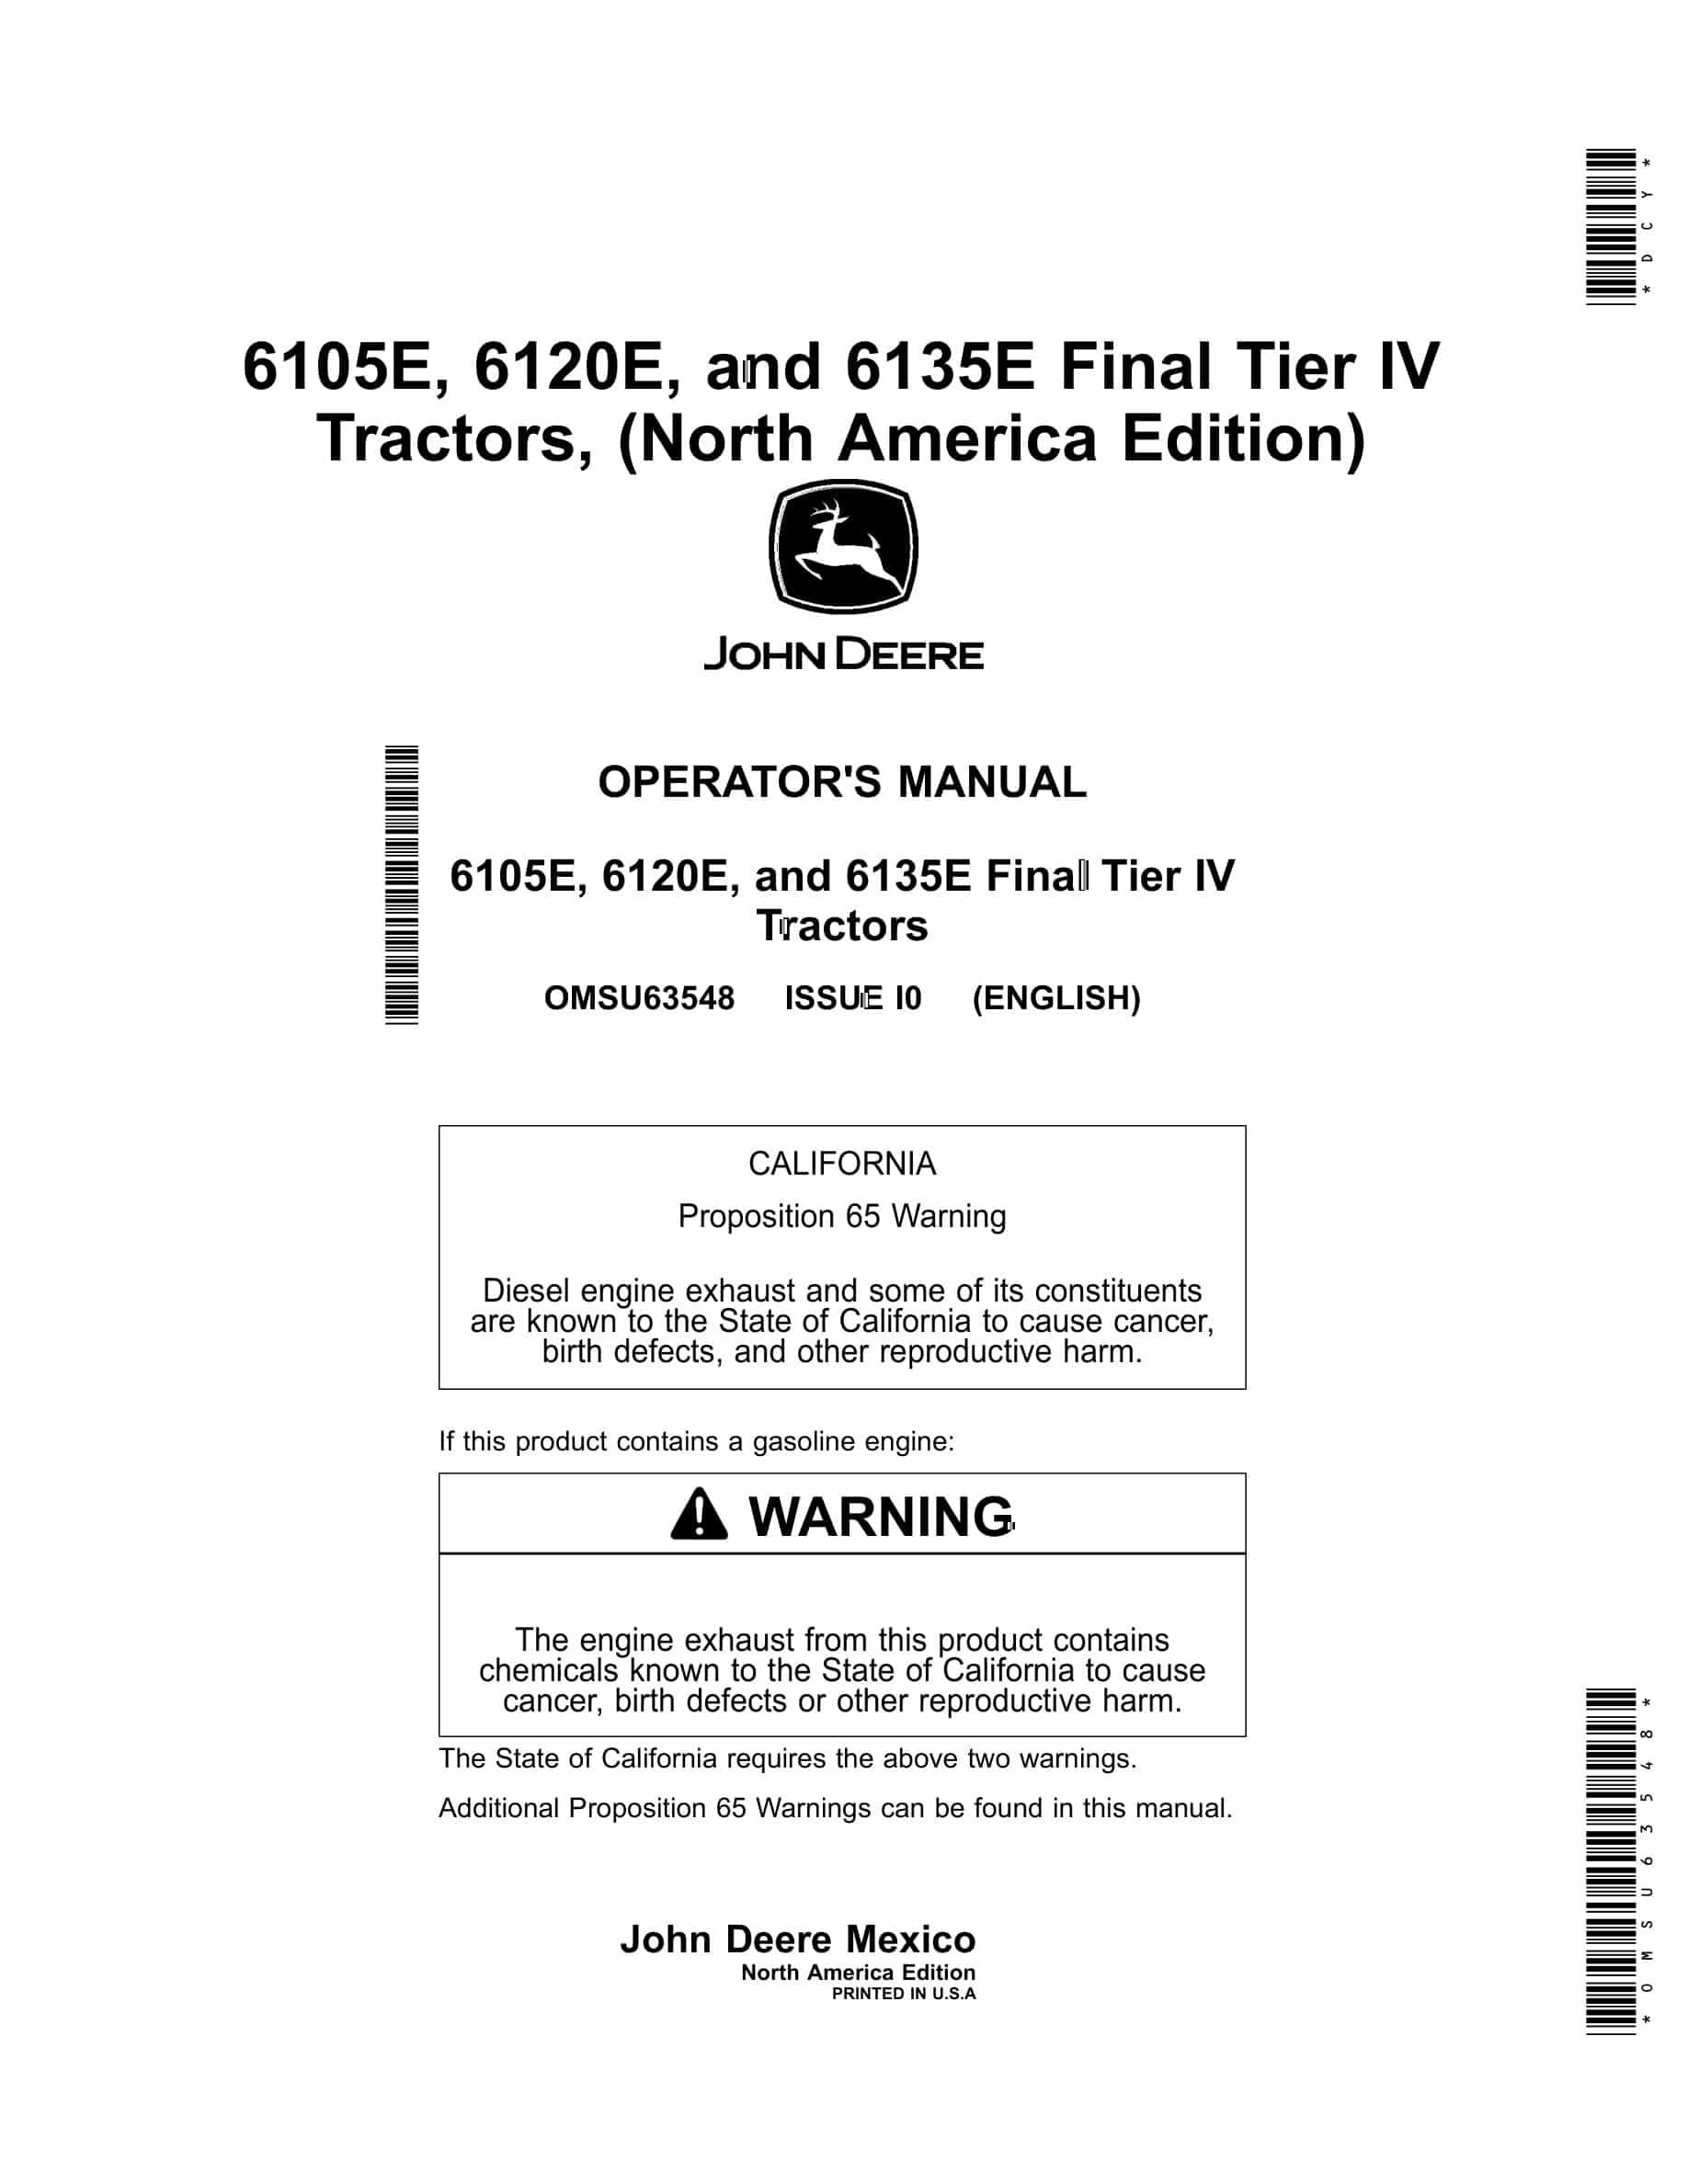 John Deere 6105E, 6120E, and 6135E Final Tier IV Tractor Operator Manual OMSU63548-1